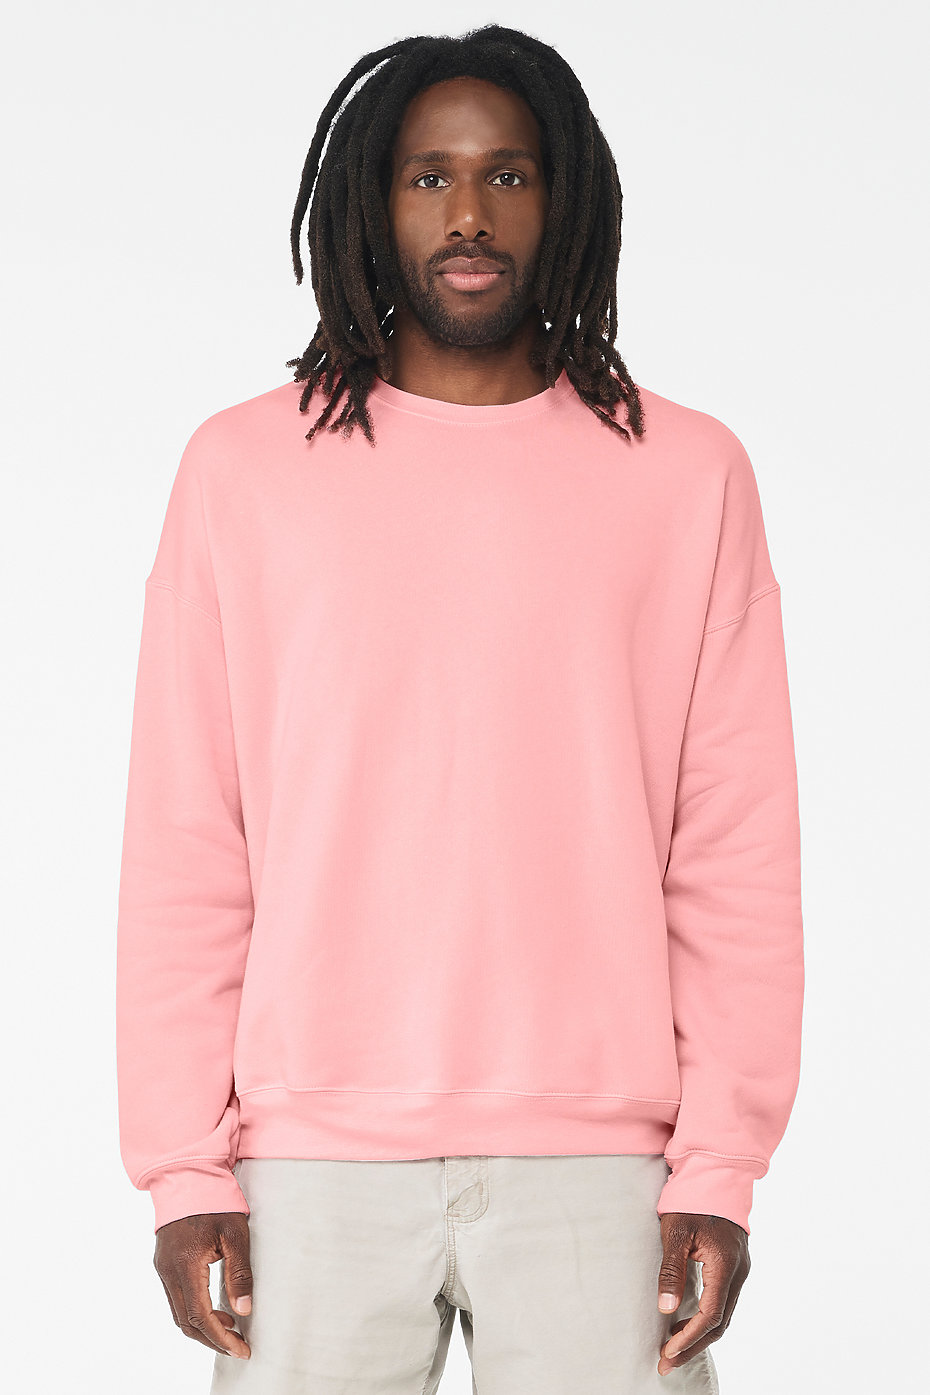 Sweatshirts For Men, Bulk Unisex Sweatshirts